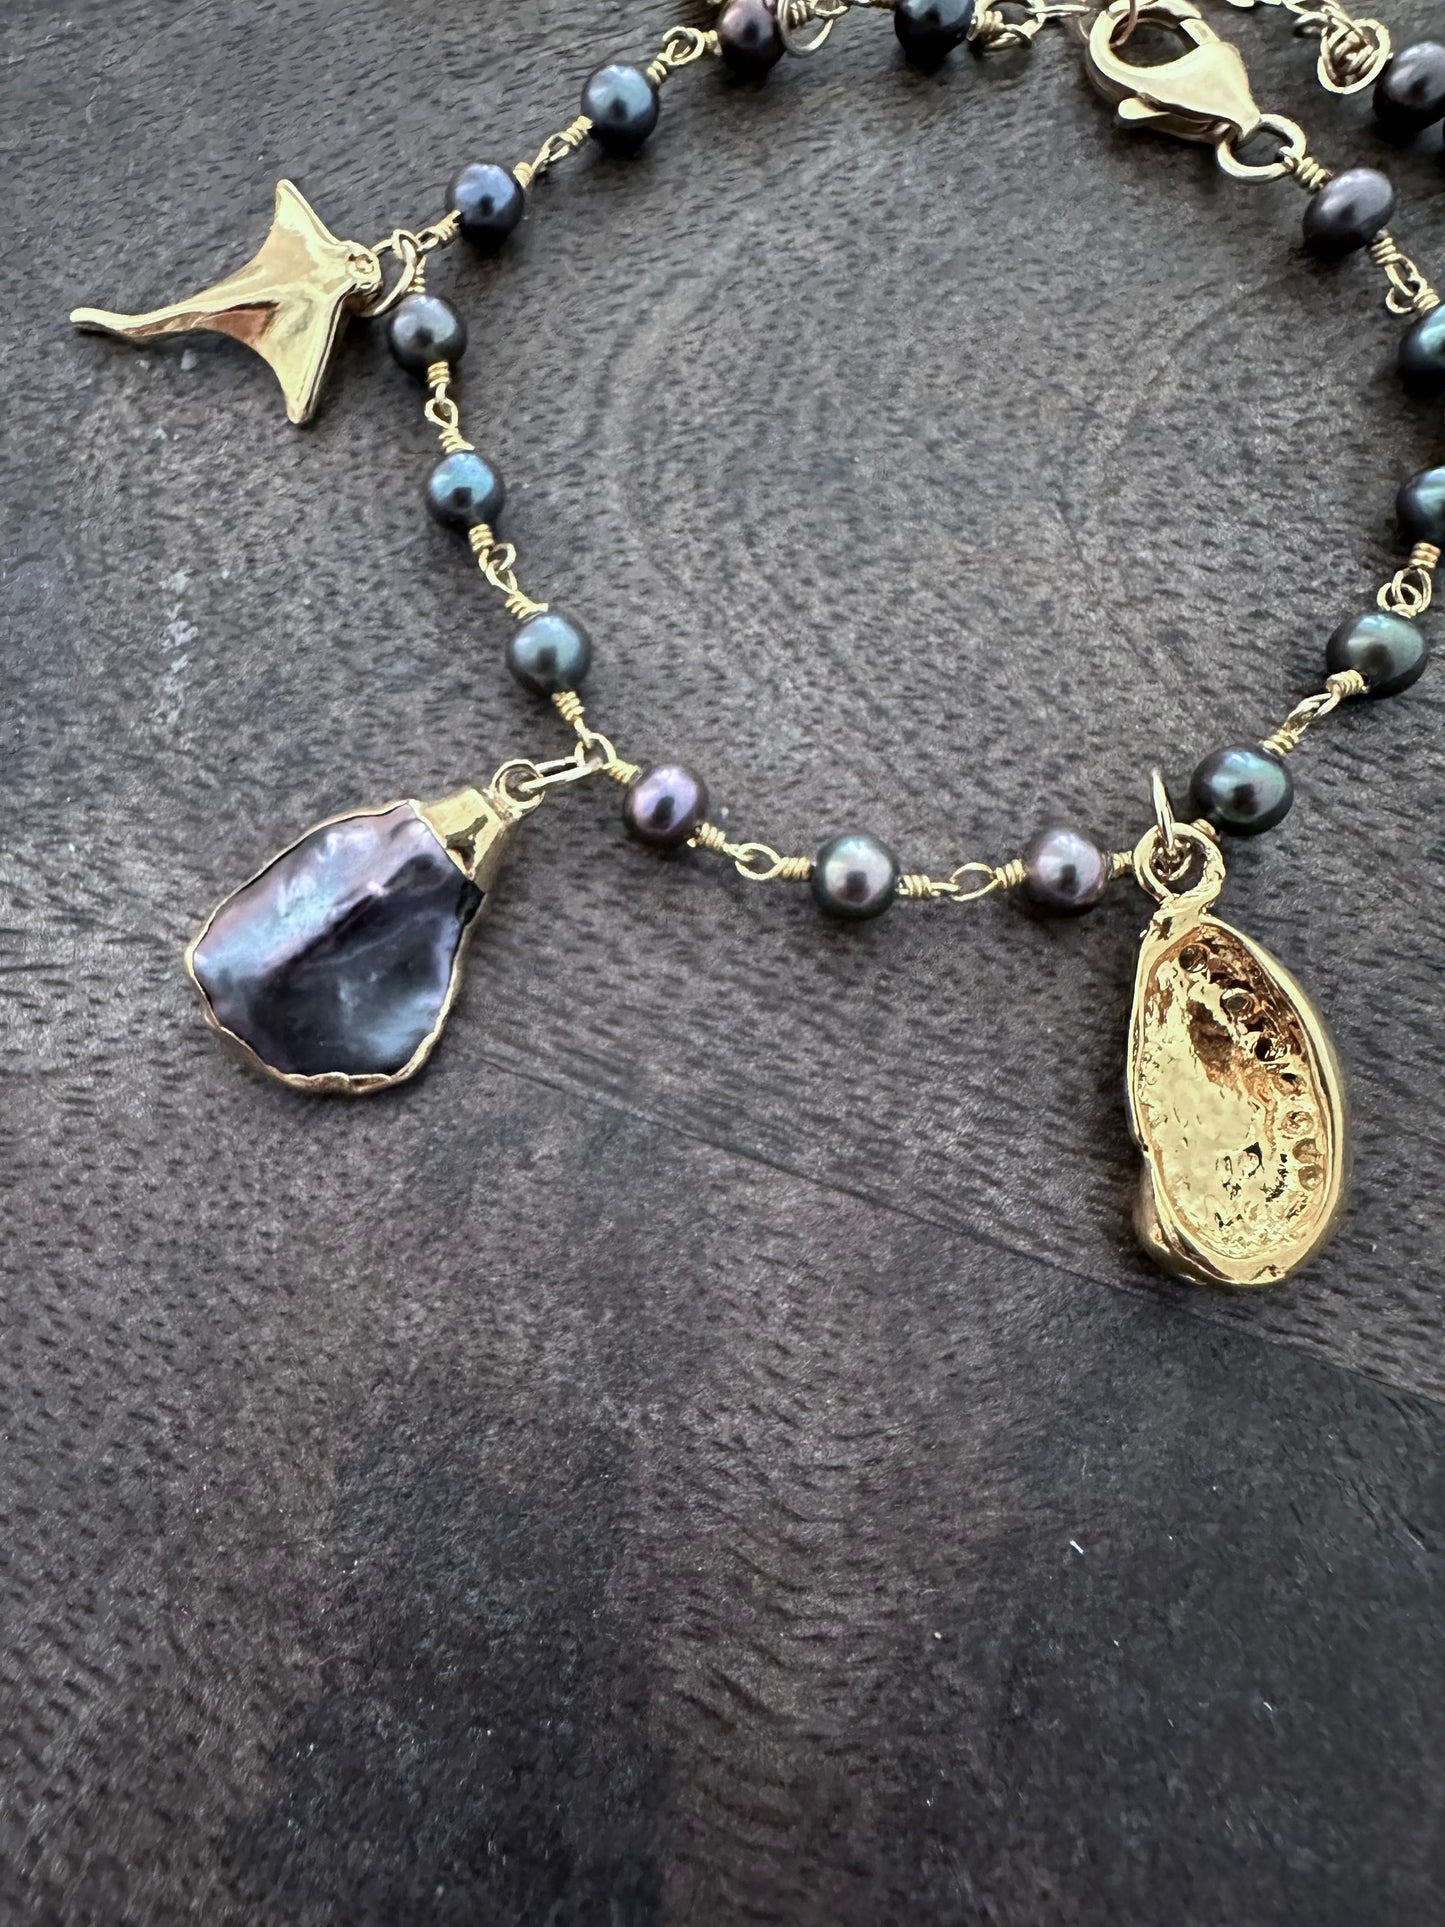 Ocean Alchemy : Vermeil Charm Bracelet with Keshi and Freshwater Pearls